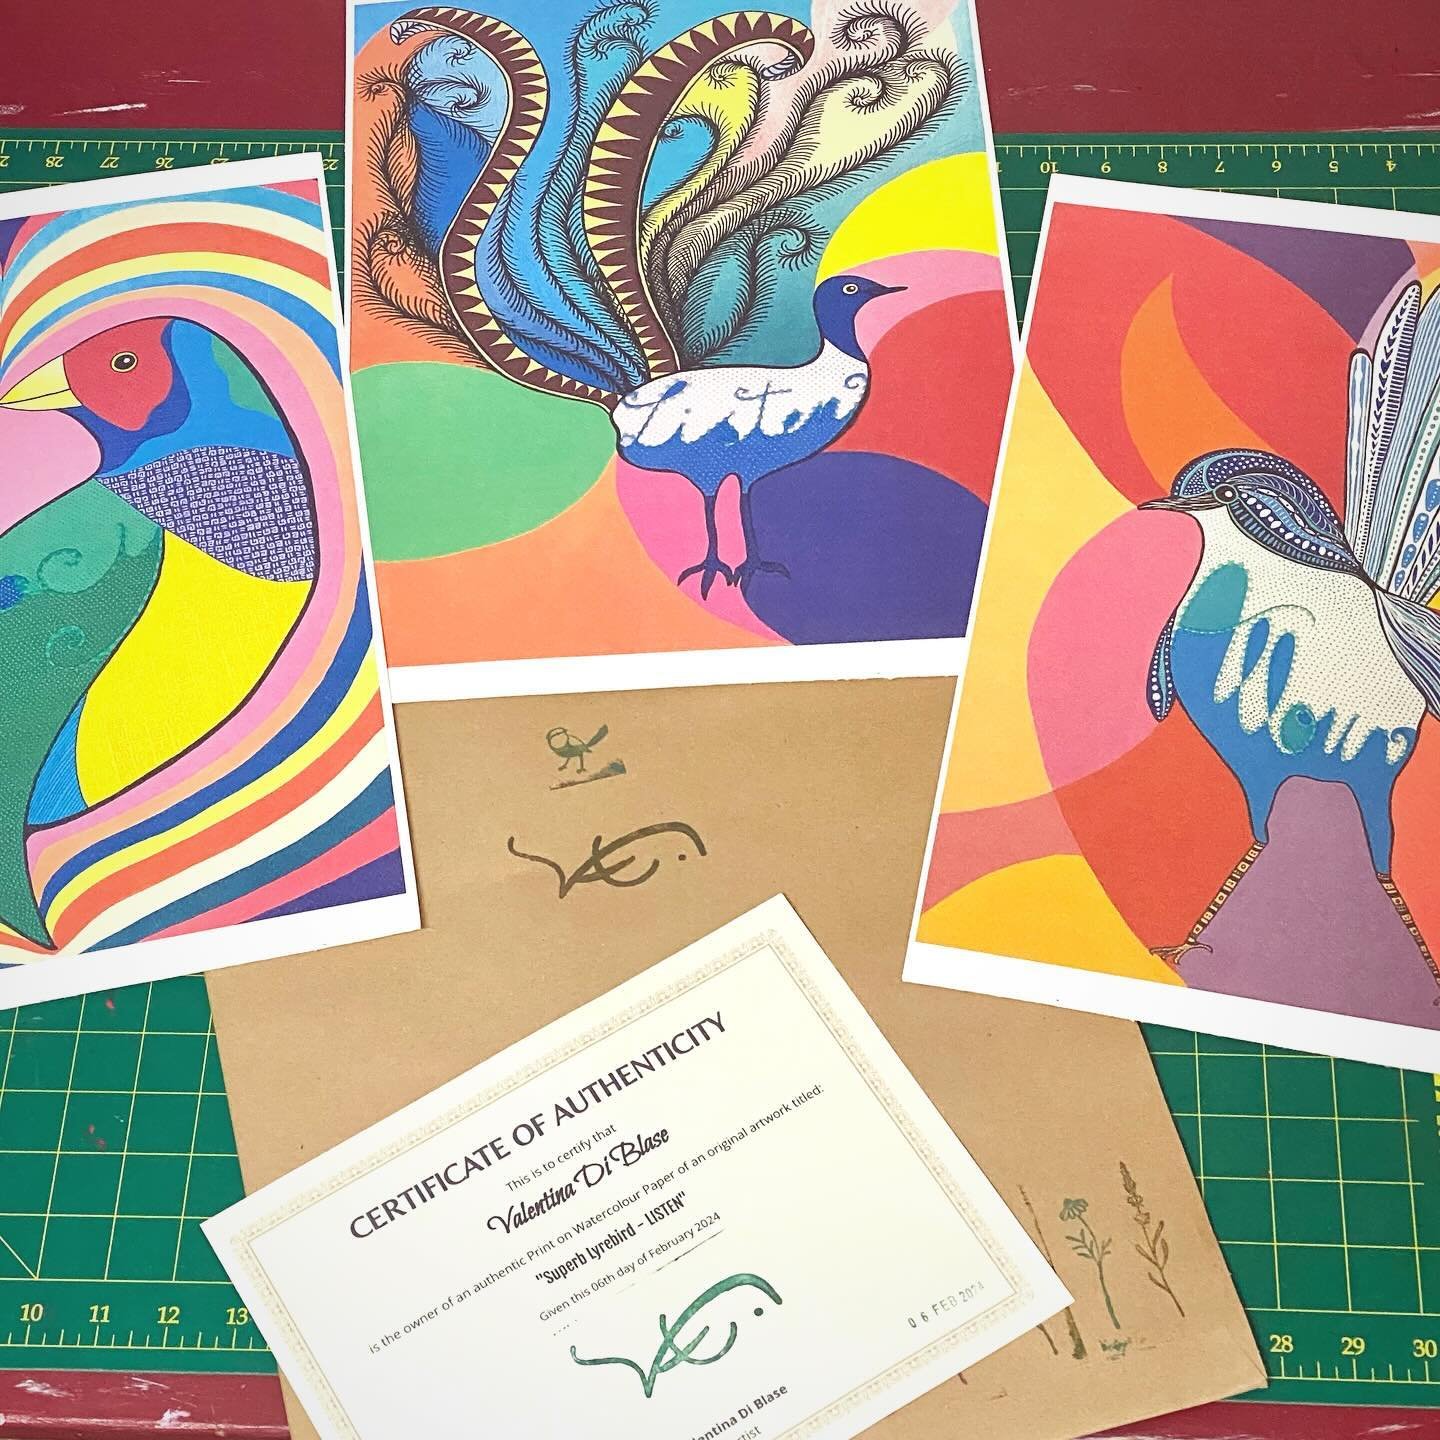 Prints for sale!

PM me for commissions!
#artforsale #birdsofaustralia #goingoverseas #artworkforsale #glowinginthedark #artinstagram #textmeforcommissions #byronbayartist